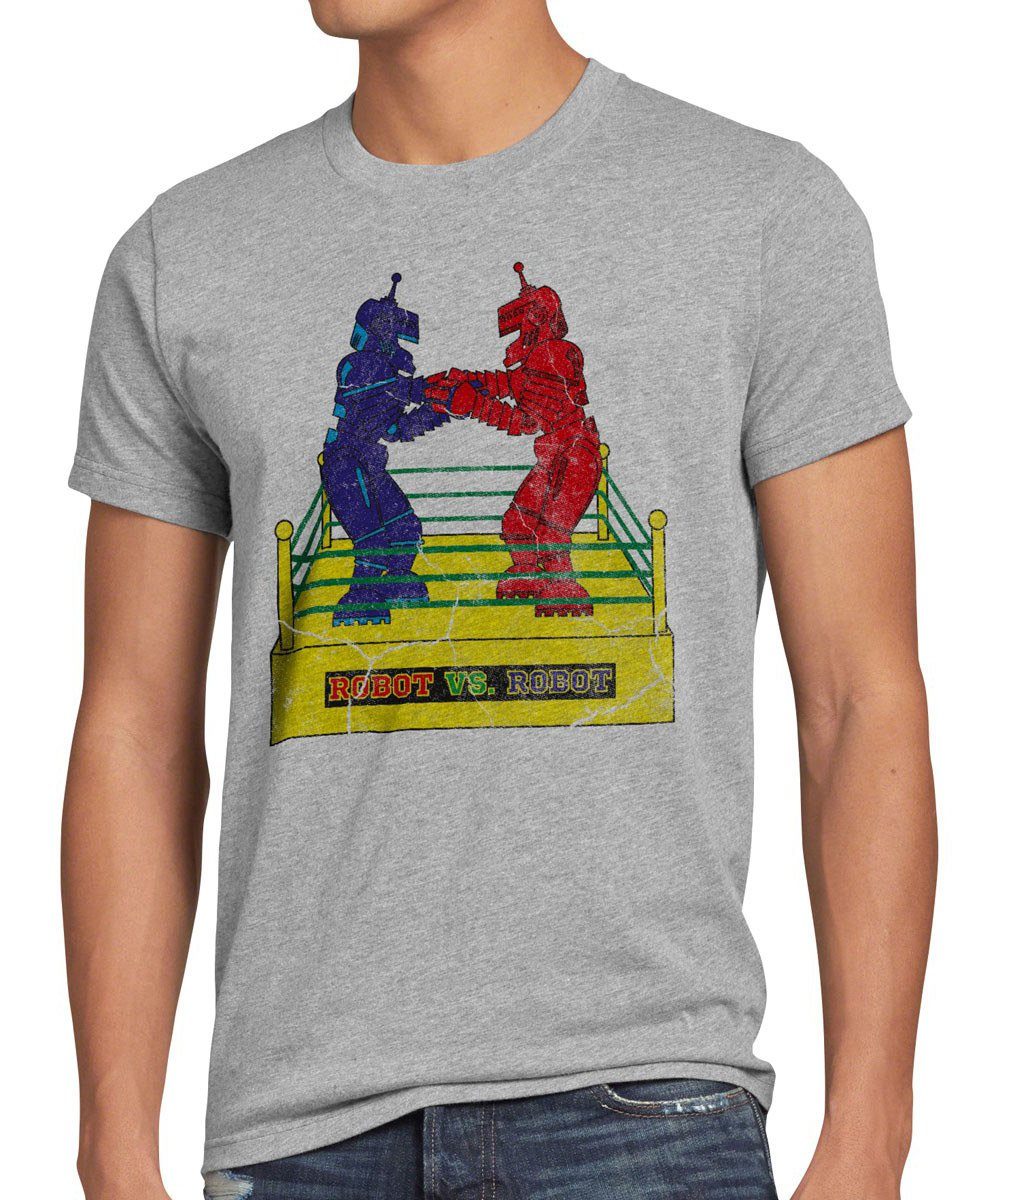 style3 Print-Shirt Herren T-Shirt Roboter big bang sheldon boxen Robot rock em spiel Cooper Theory grau meliert